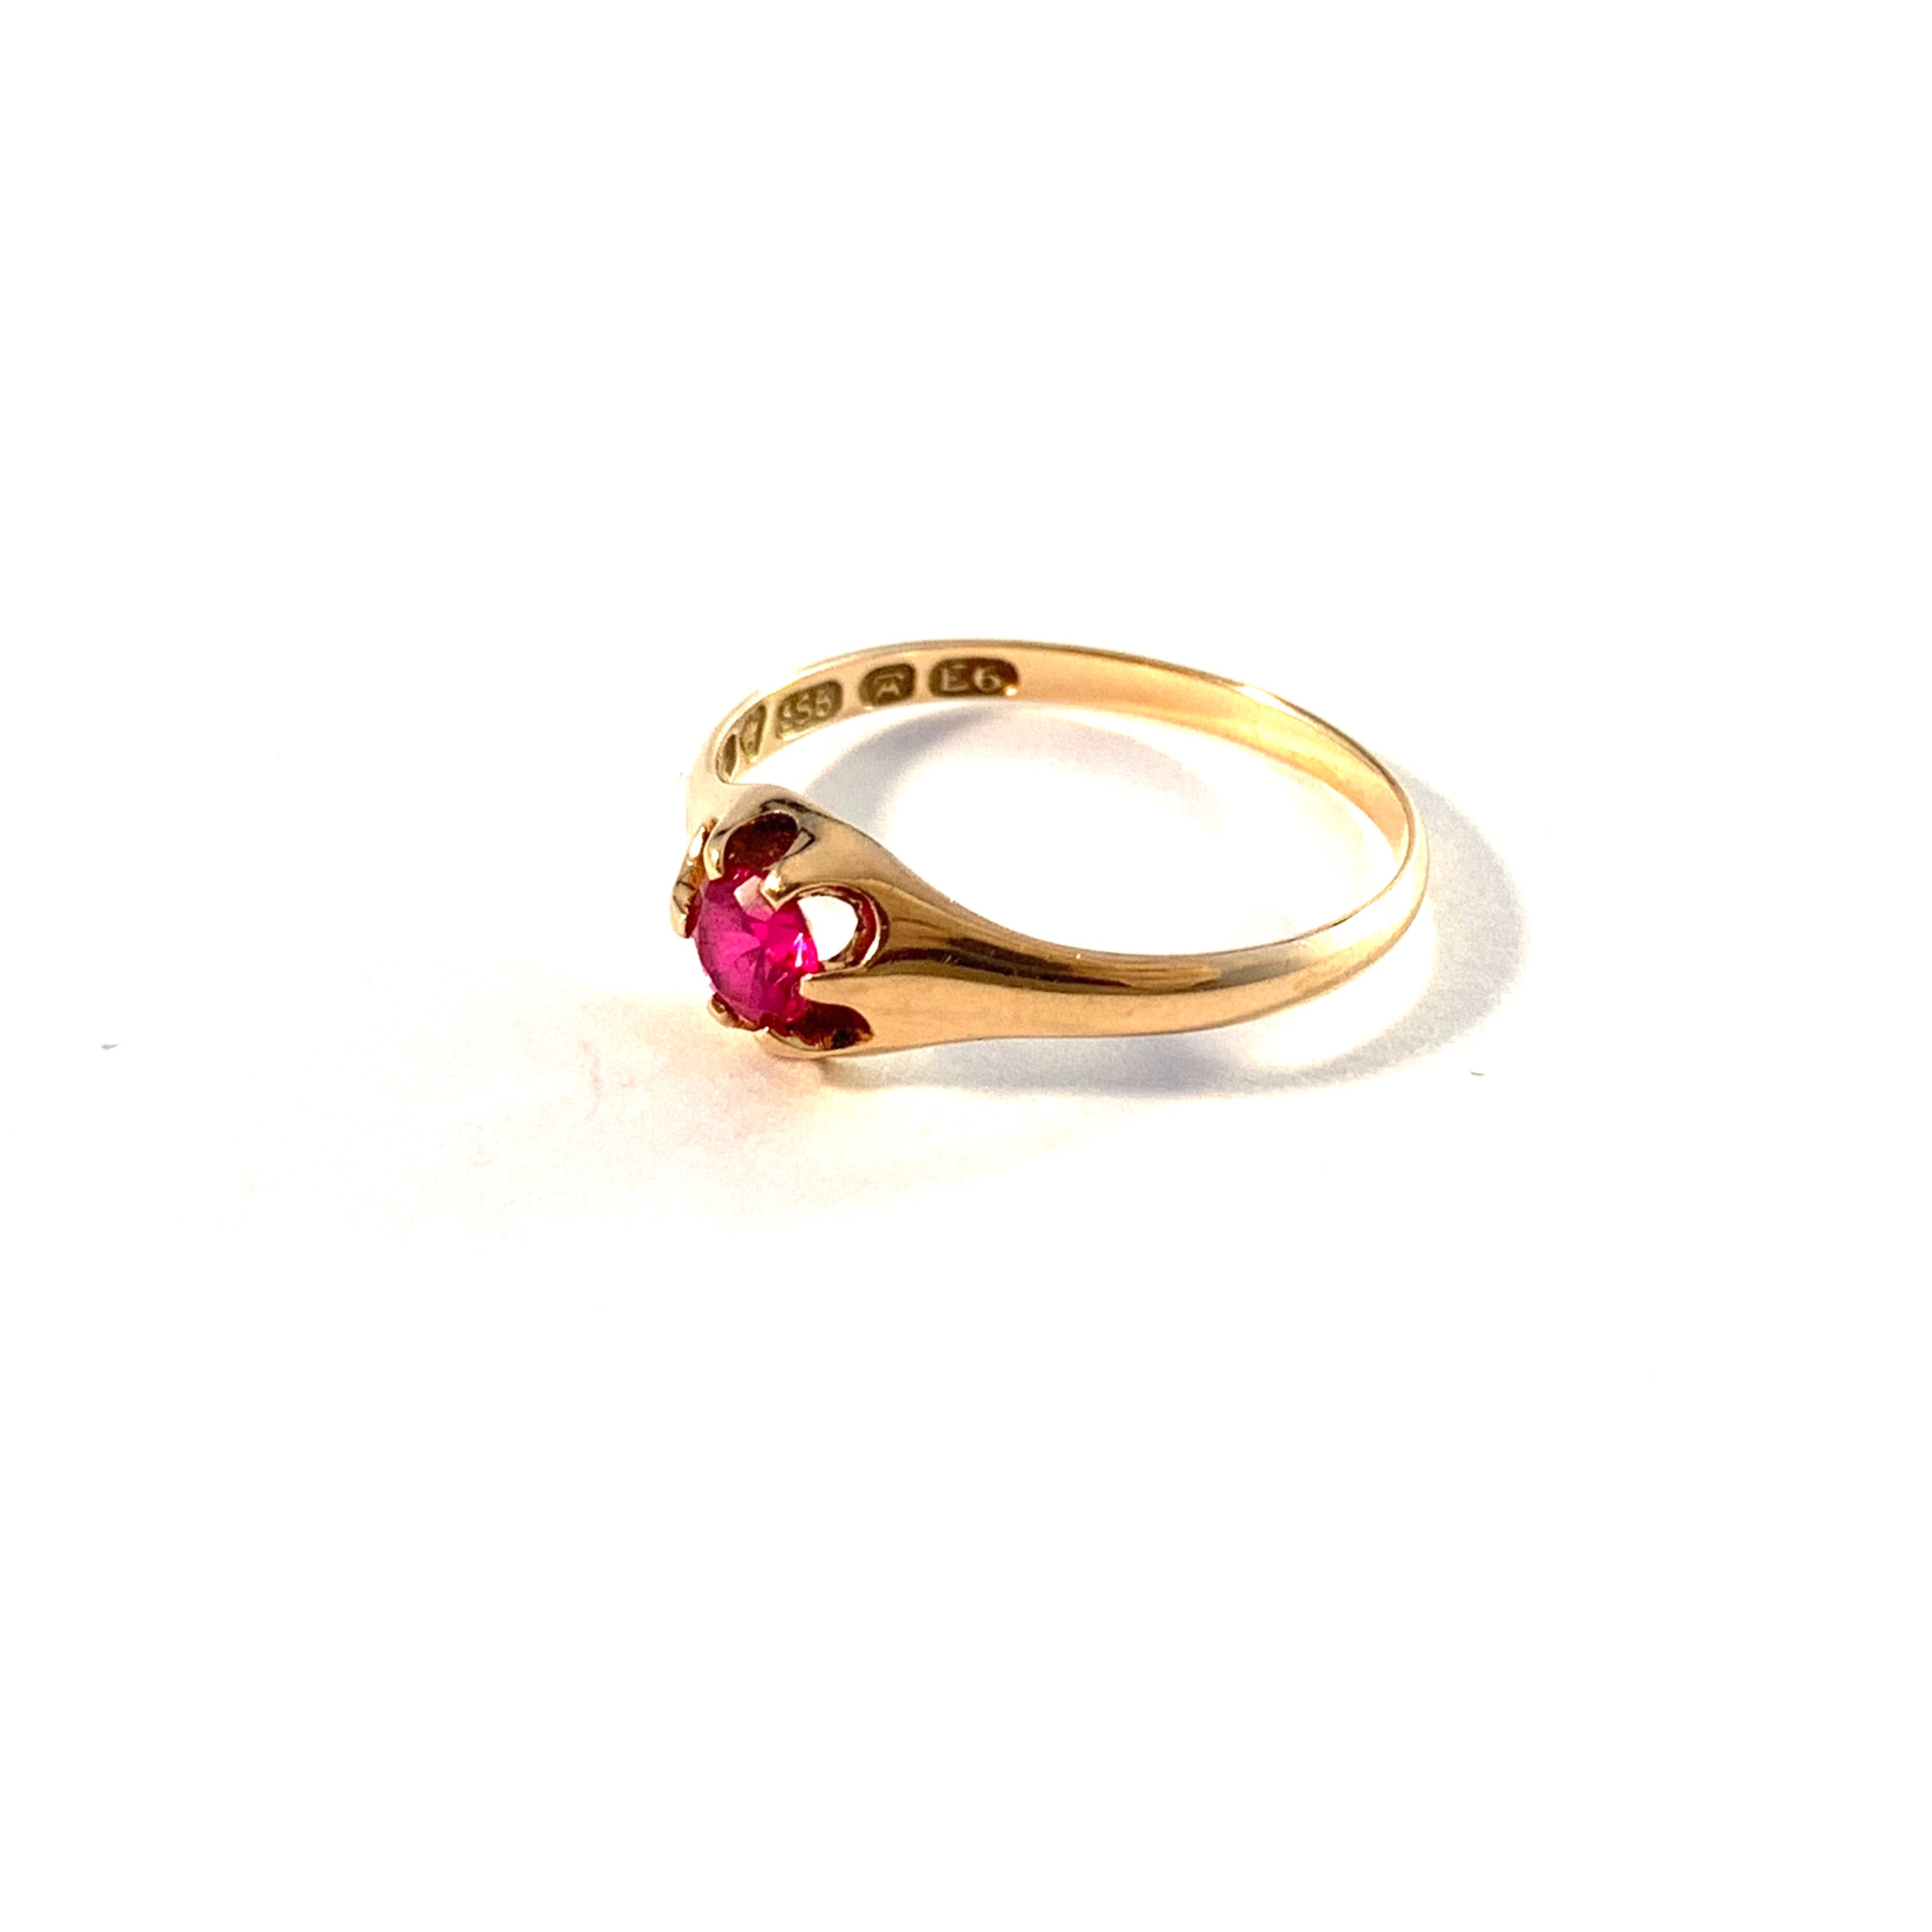 Osuusliike, Finland 1934. Vintage 14k Gold Synthetic Sapphire Ring.